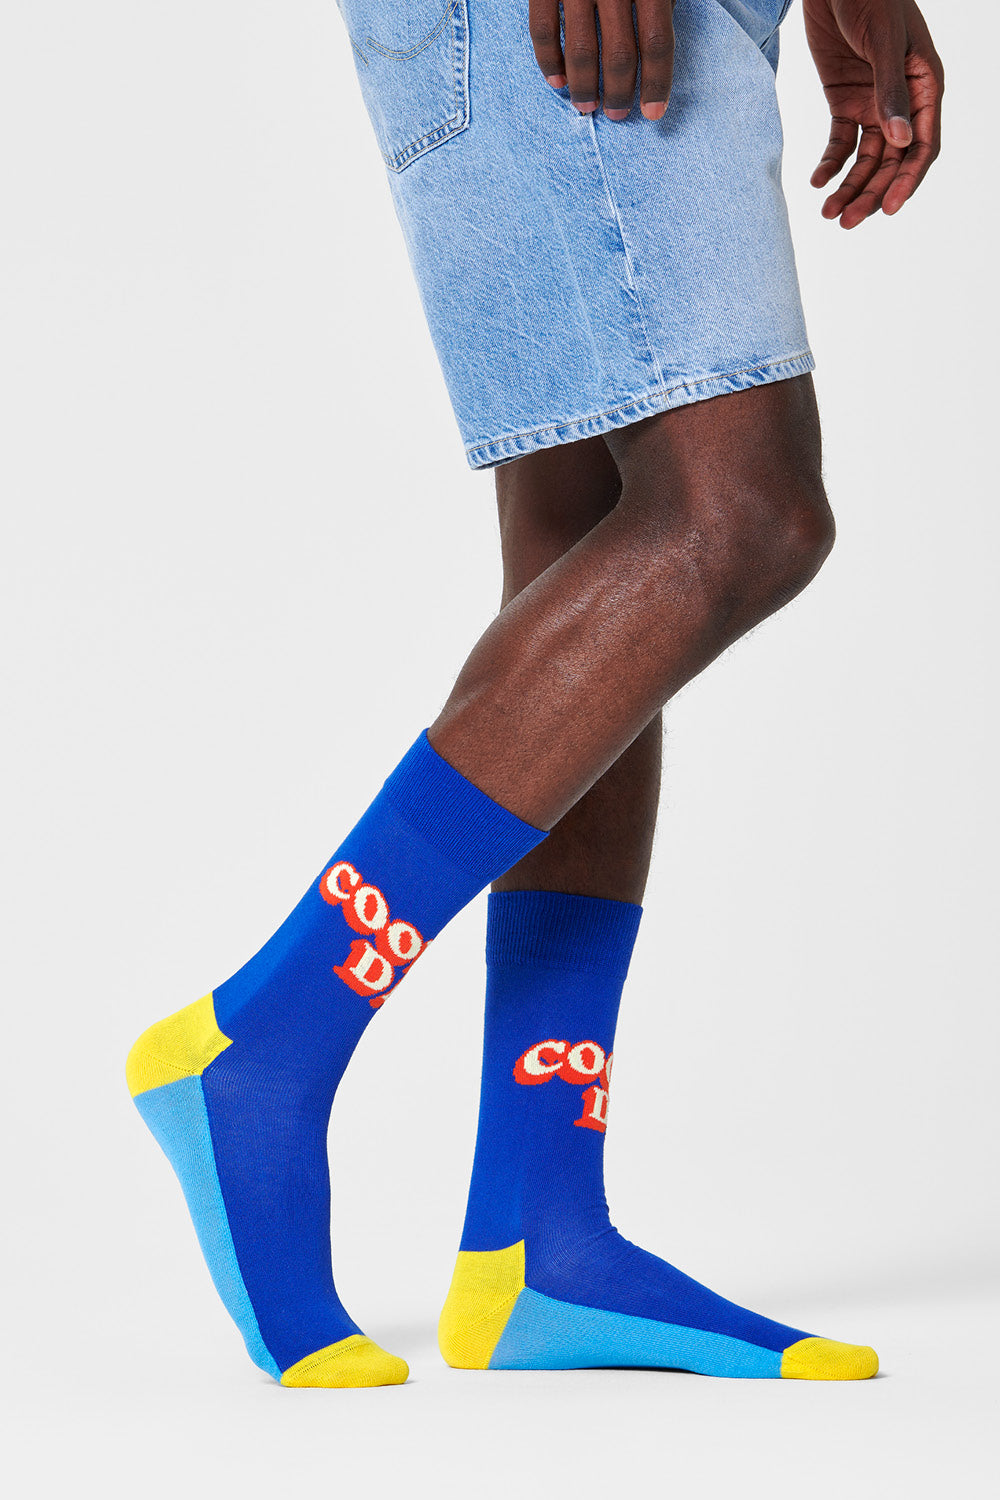 Happy Socks – Hoopers Stores